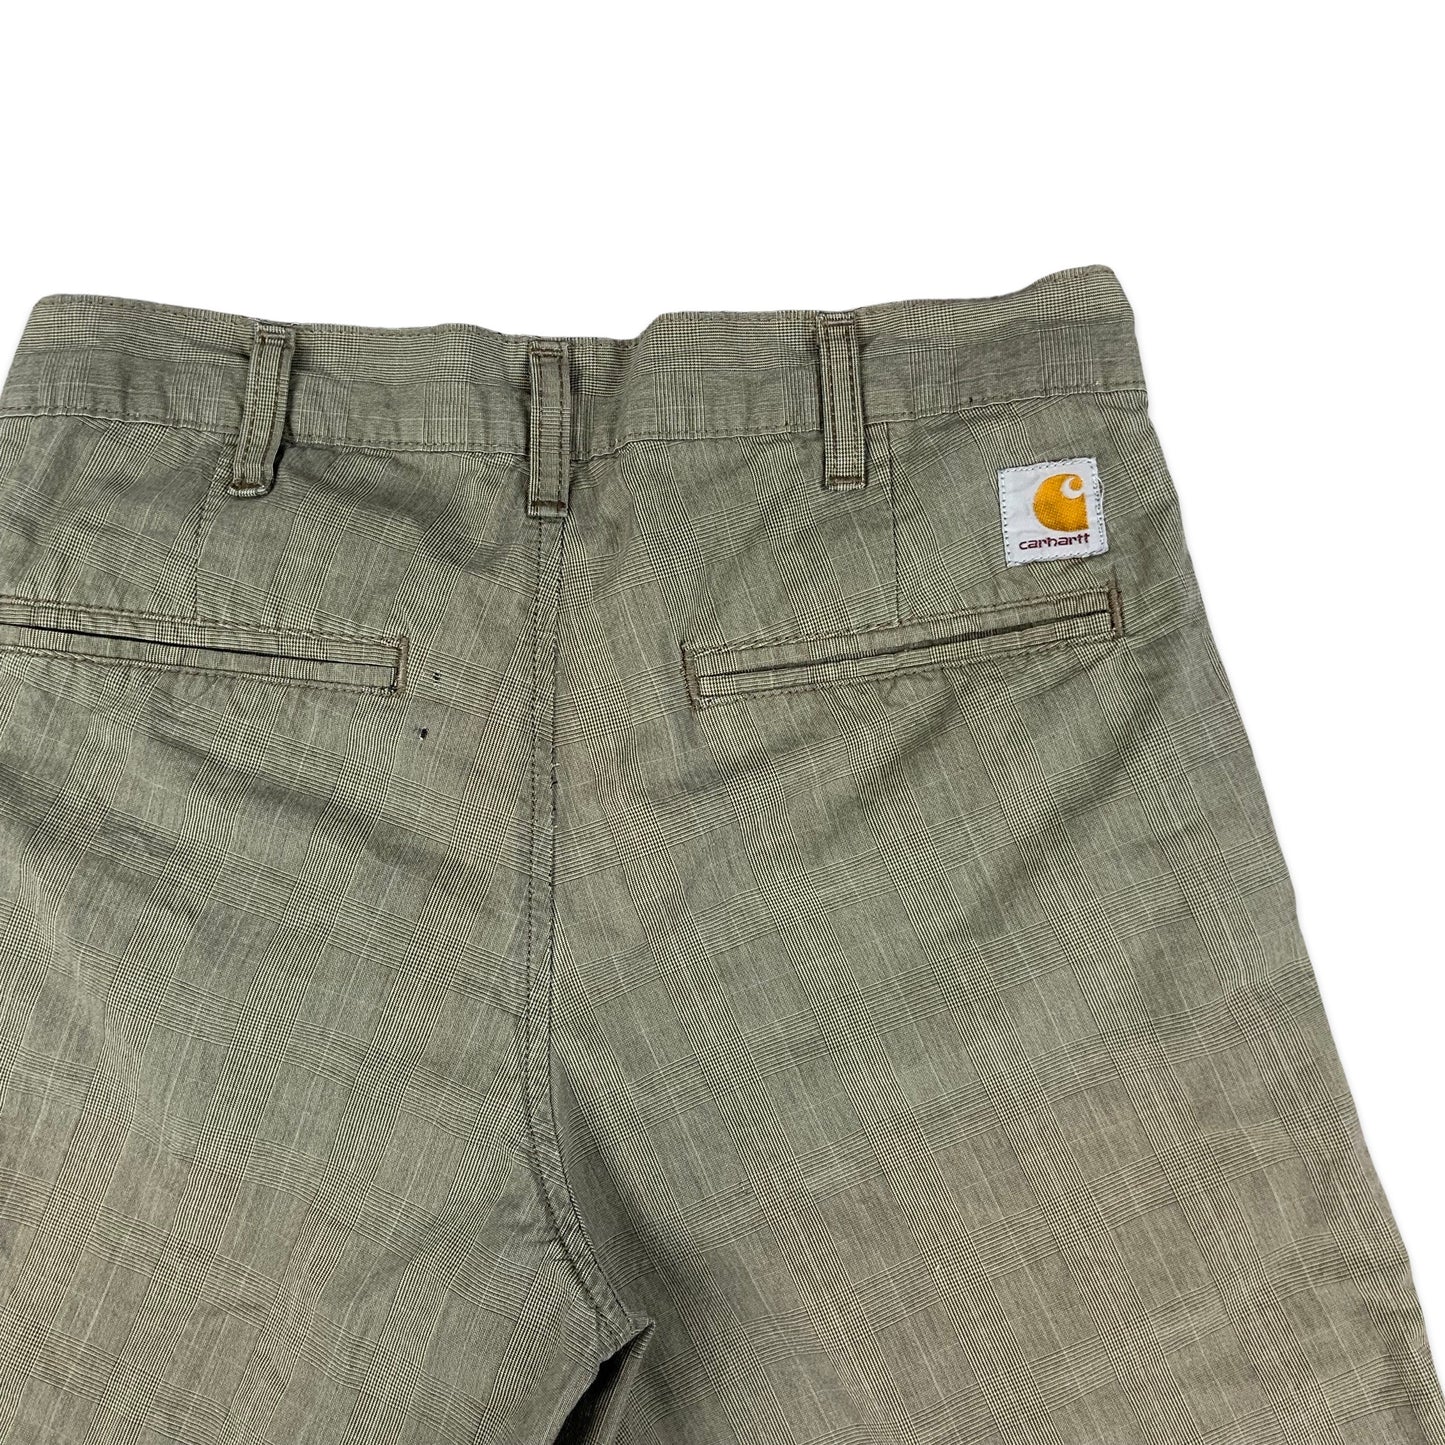 Vintage Khaki Plaid Carhartt Shorts XS S